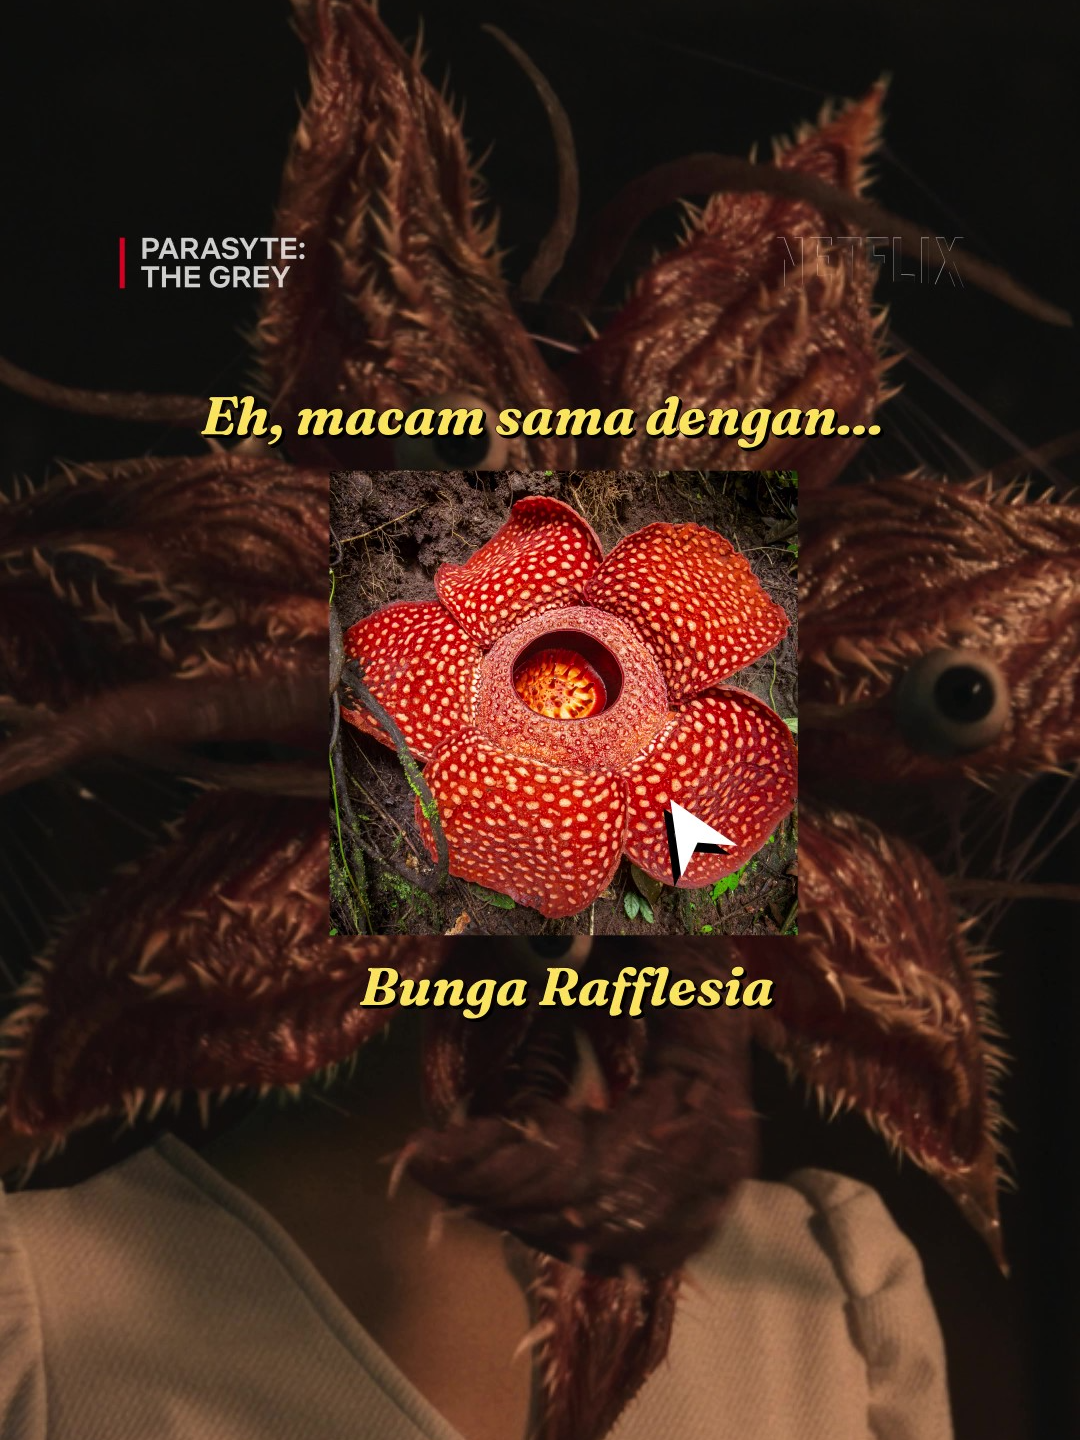 Bukan ke bunga Rafflesia ni busuk jugak? 😅 Kalau ada si parasite versi Rafflesia ni nak datang Malaysia, mandi dulu pls. #ParasyteTheGrey #DONECLAIM #SembangEntertainment #DramaTikTok #NewReleases #KDramas #KDramaLovers #WhatToWatch #TVRecommendations #NetflixMY #FlixReview